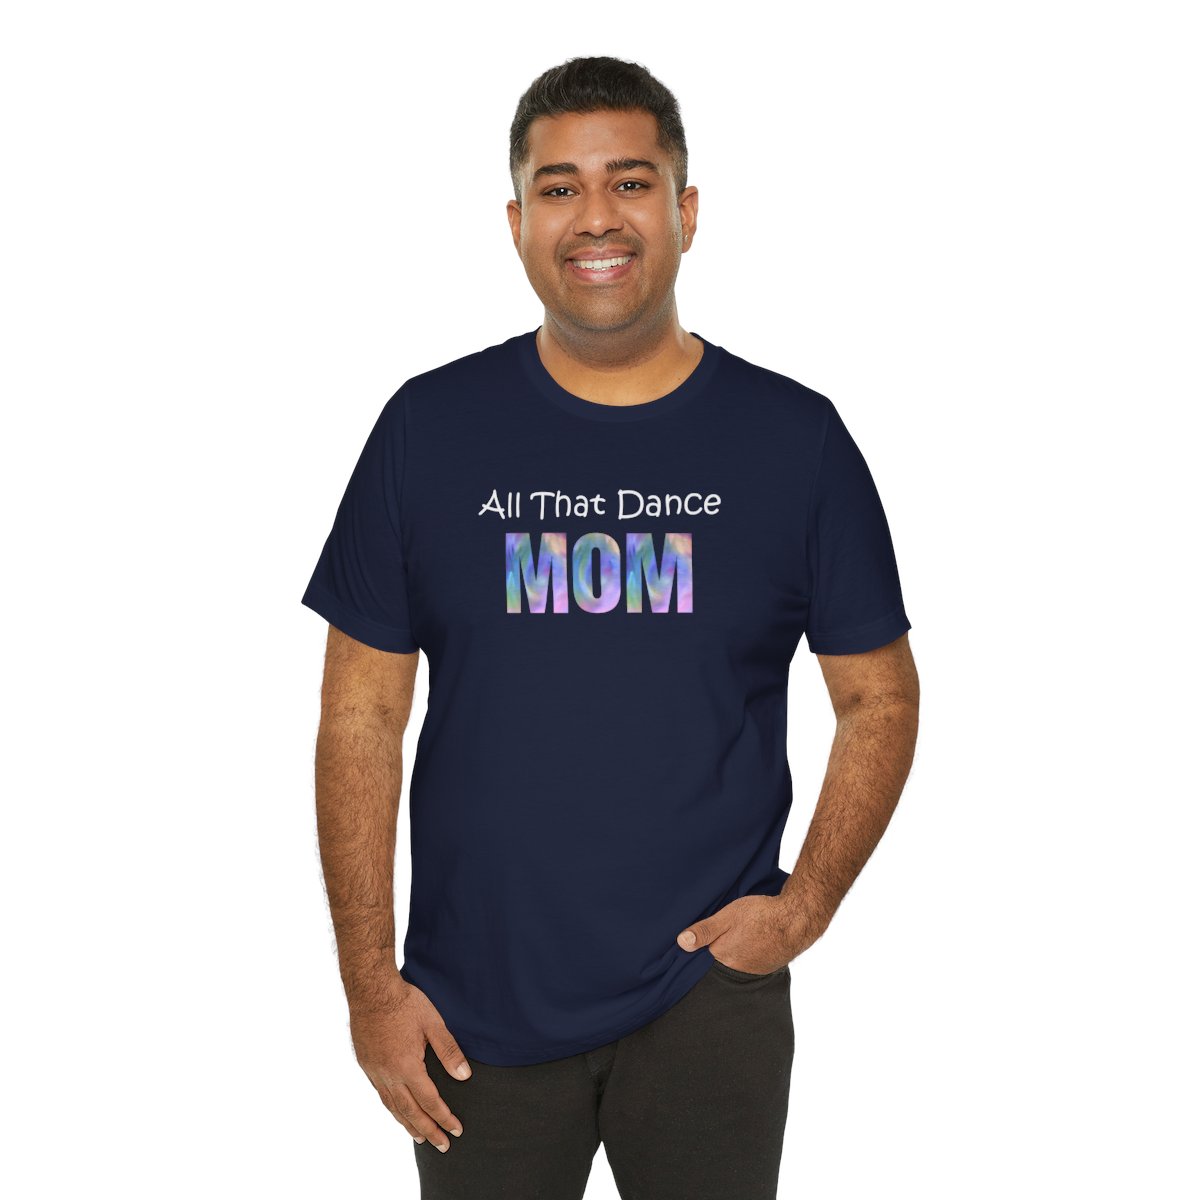 All That Dance Mom Tshirt product thumbnail image